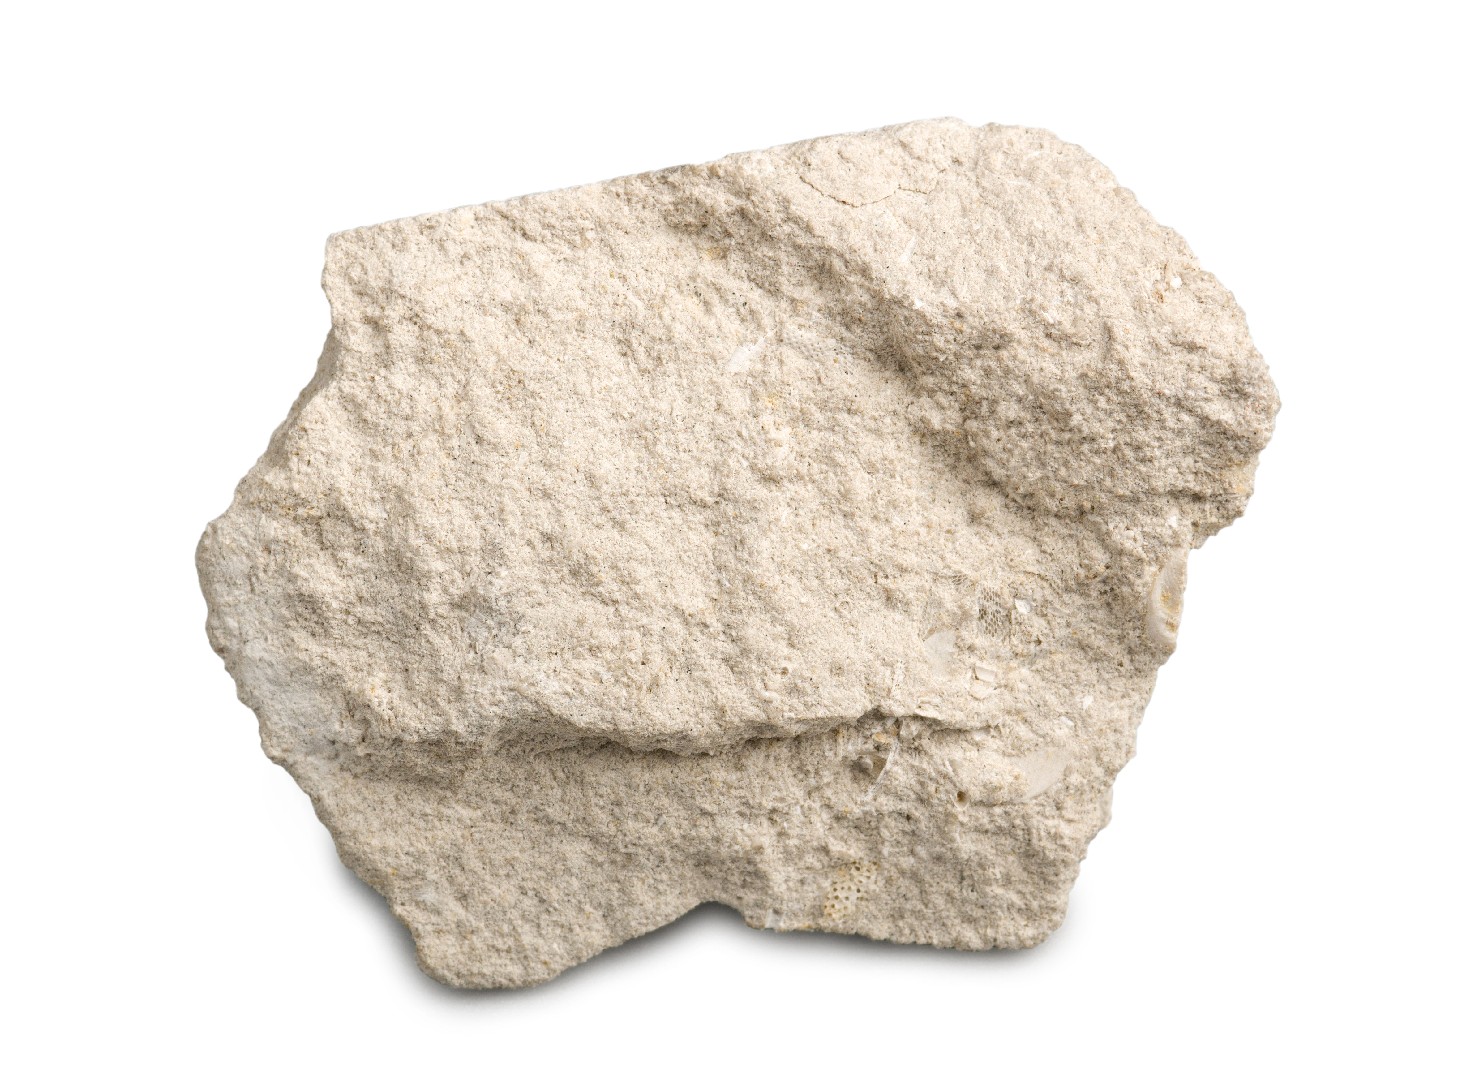 Kalkstein (Limestone)